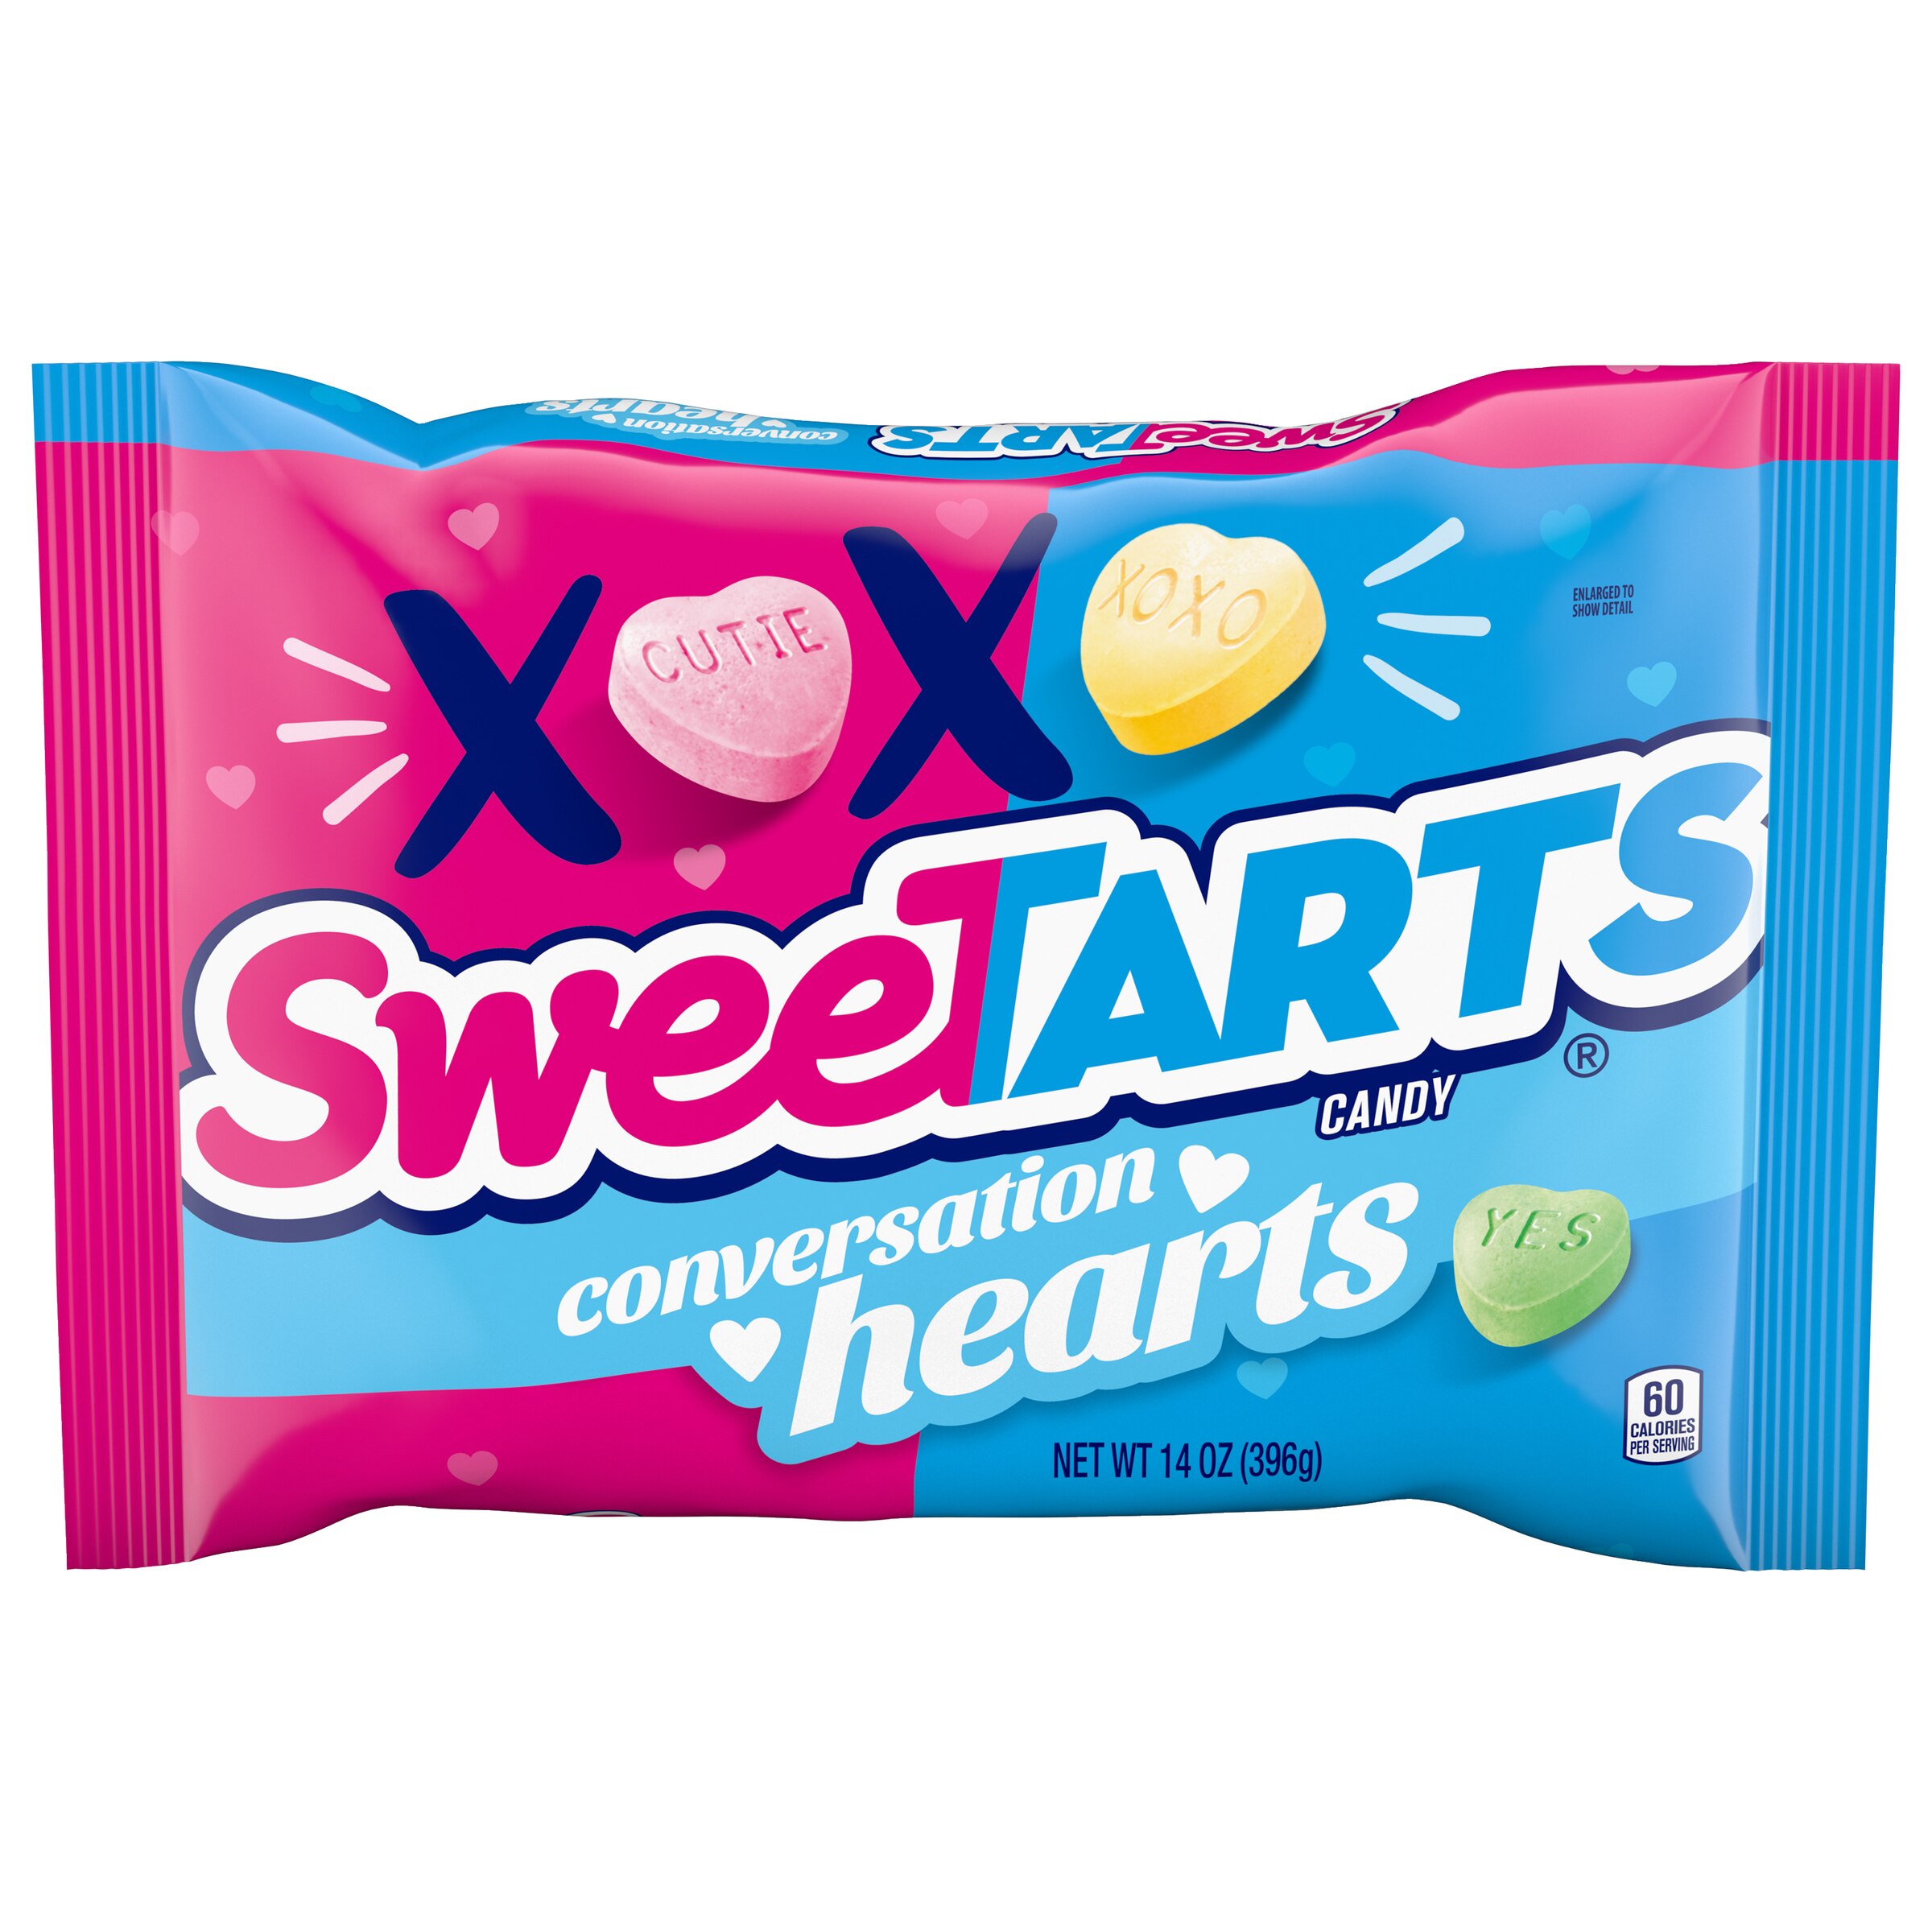 Brach's Candy, Conversation Hearts, Large - 10 oz